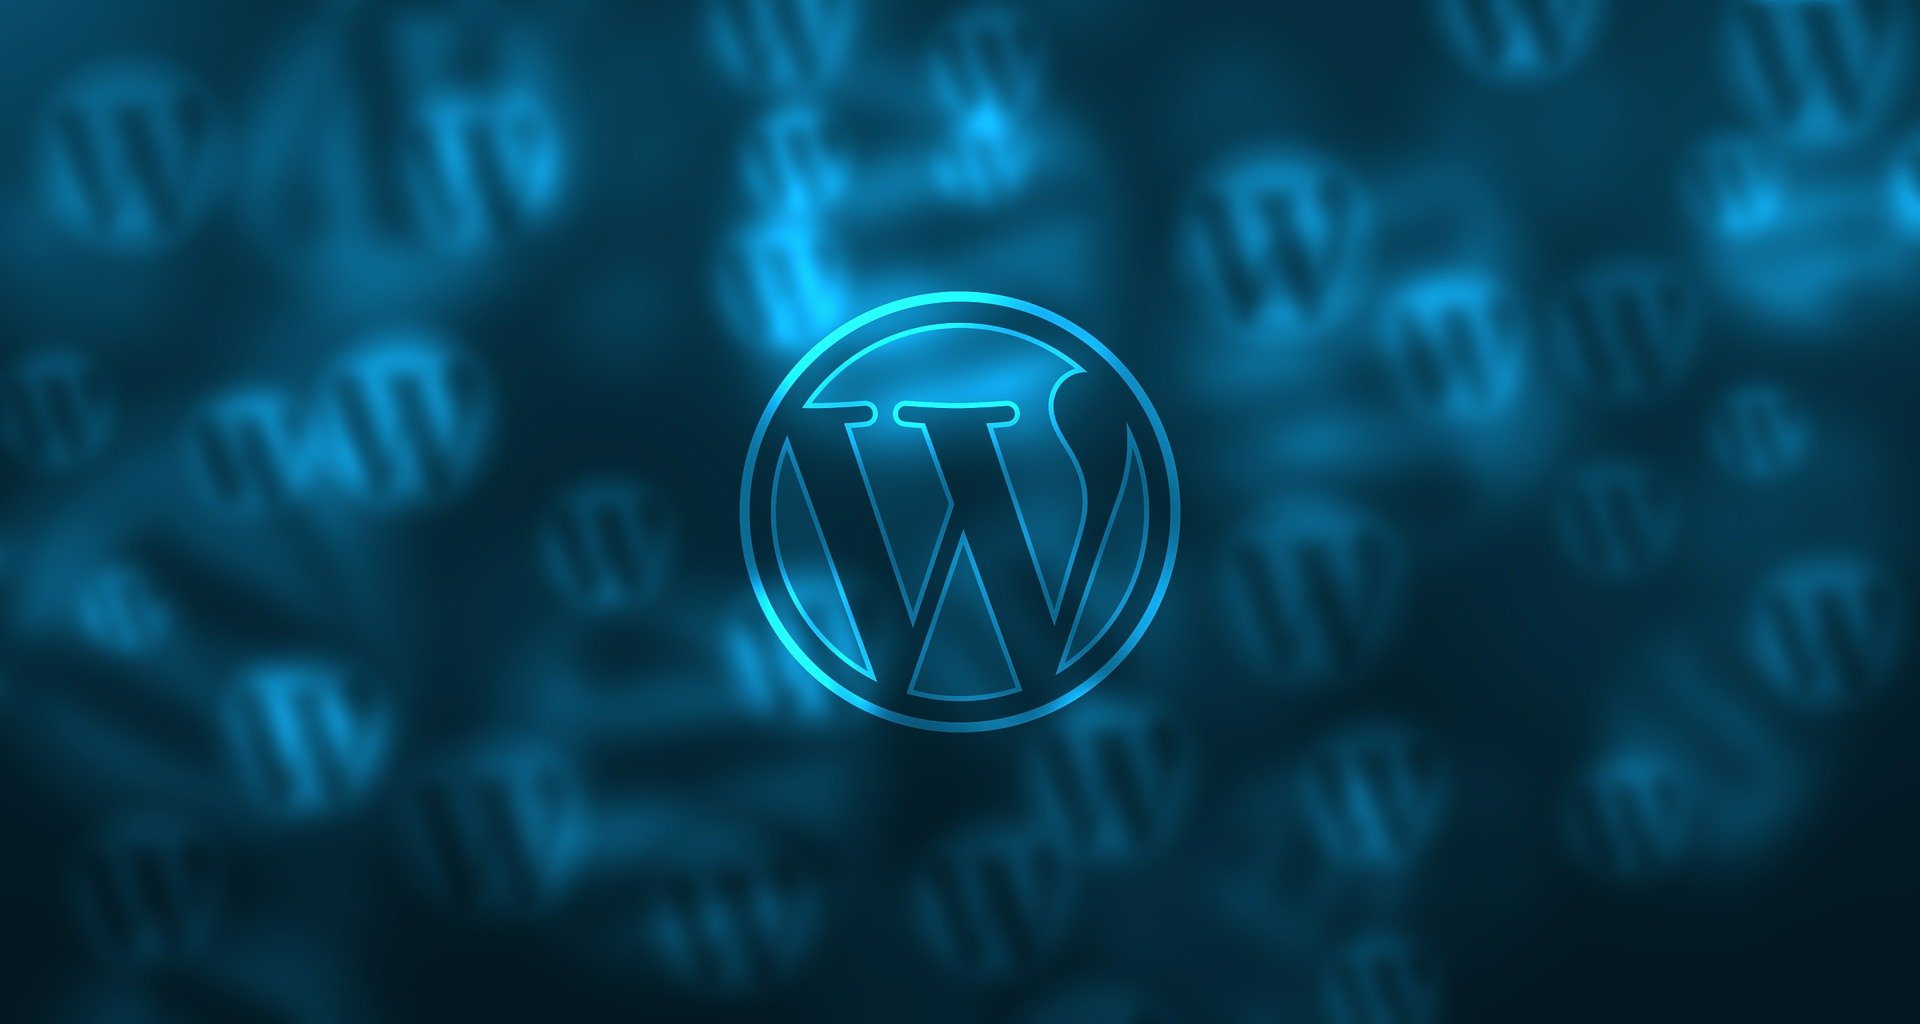 WordPress site